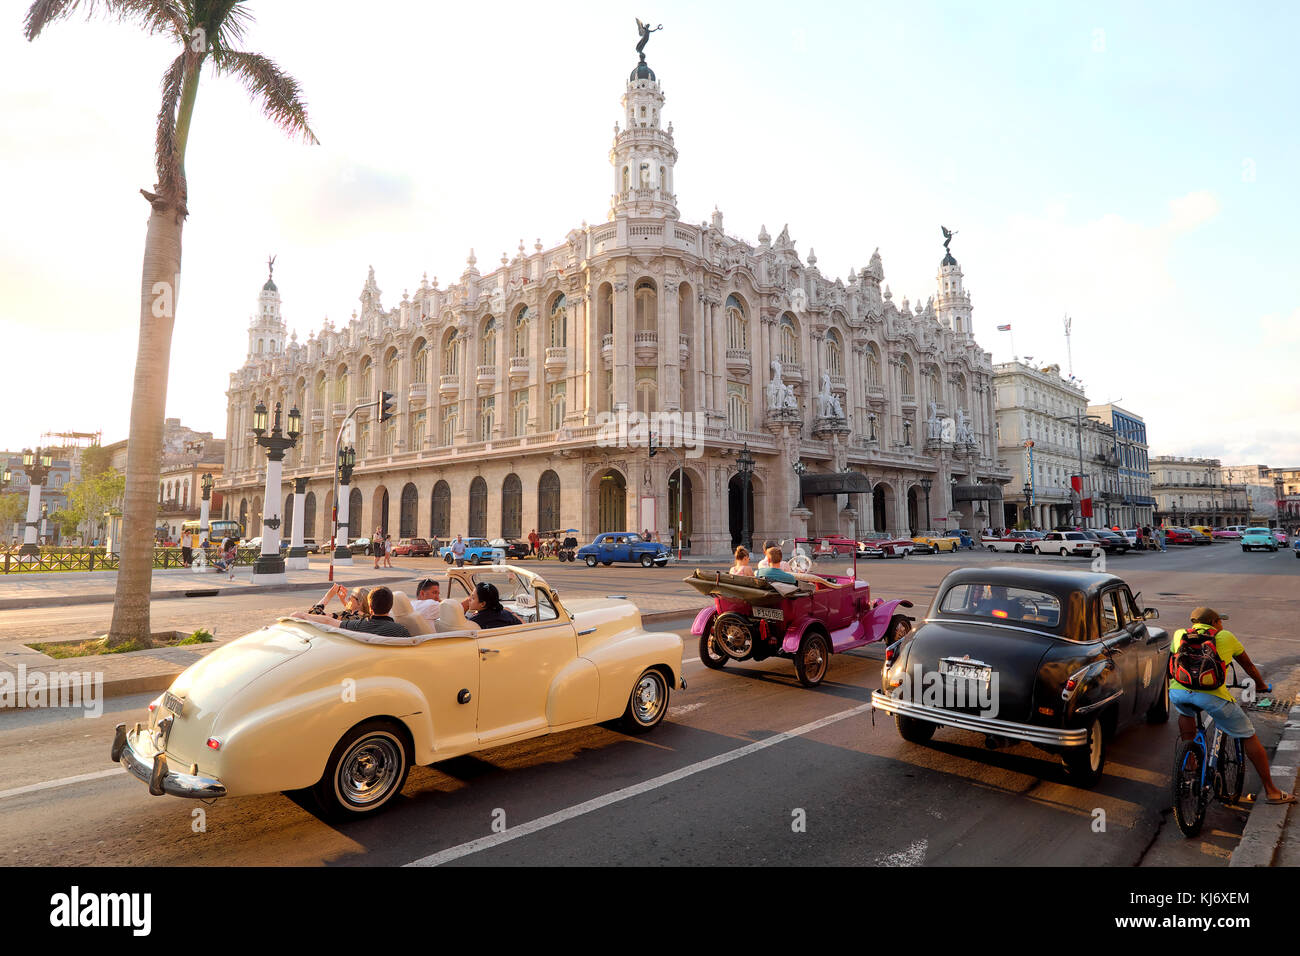 American cars in front of the Gran Teatro de La Habana Alicia Alonso Theatre, Paseo del Prado Street, Havana, Cuba Stock Photo